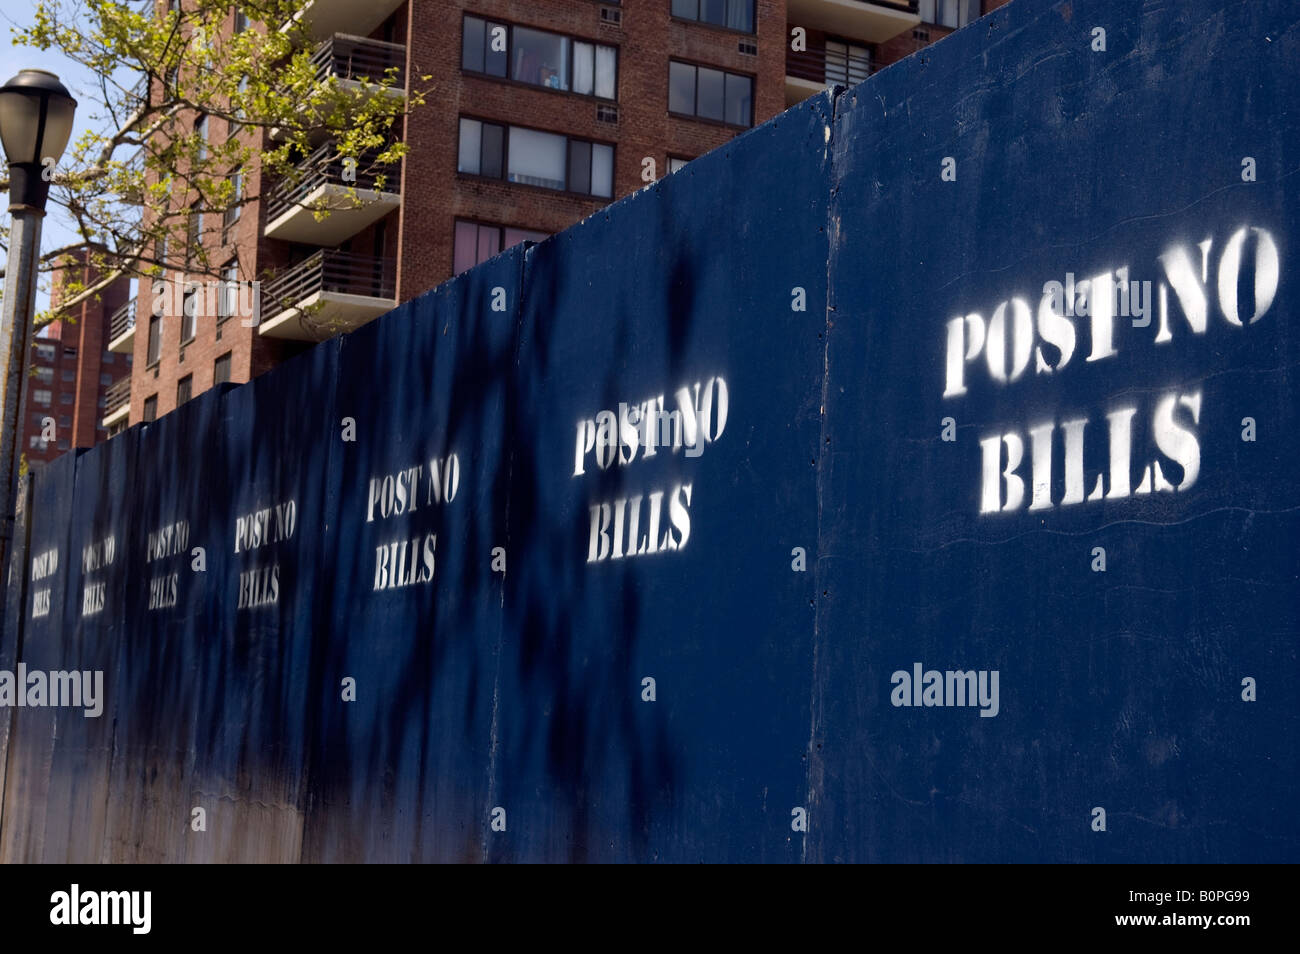 Post No Bills at construction site Stock Photo